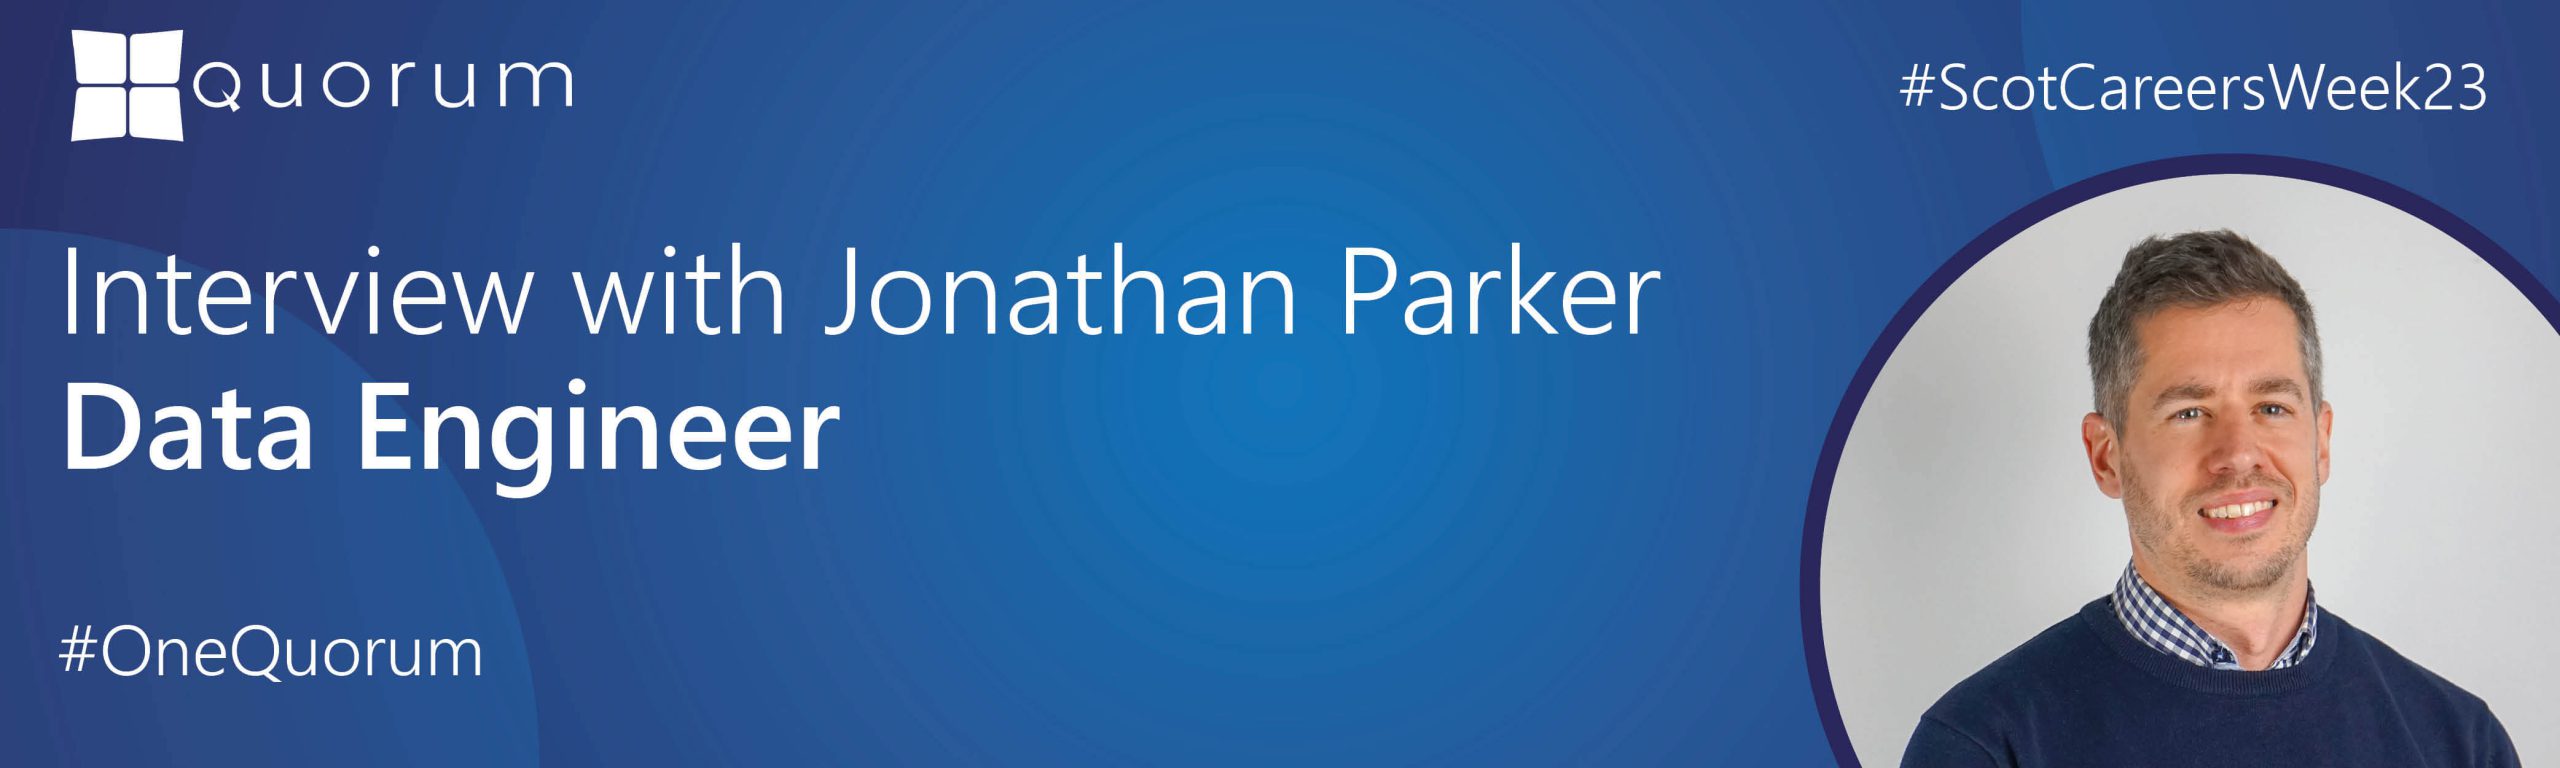 Website Banner Scottish Careers Week - Jonathan Parker